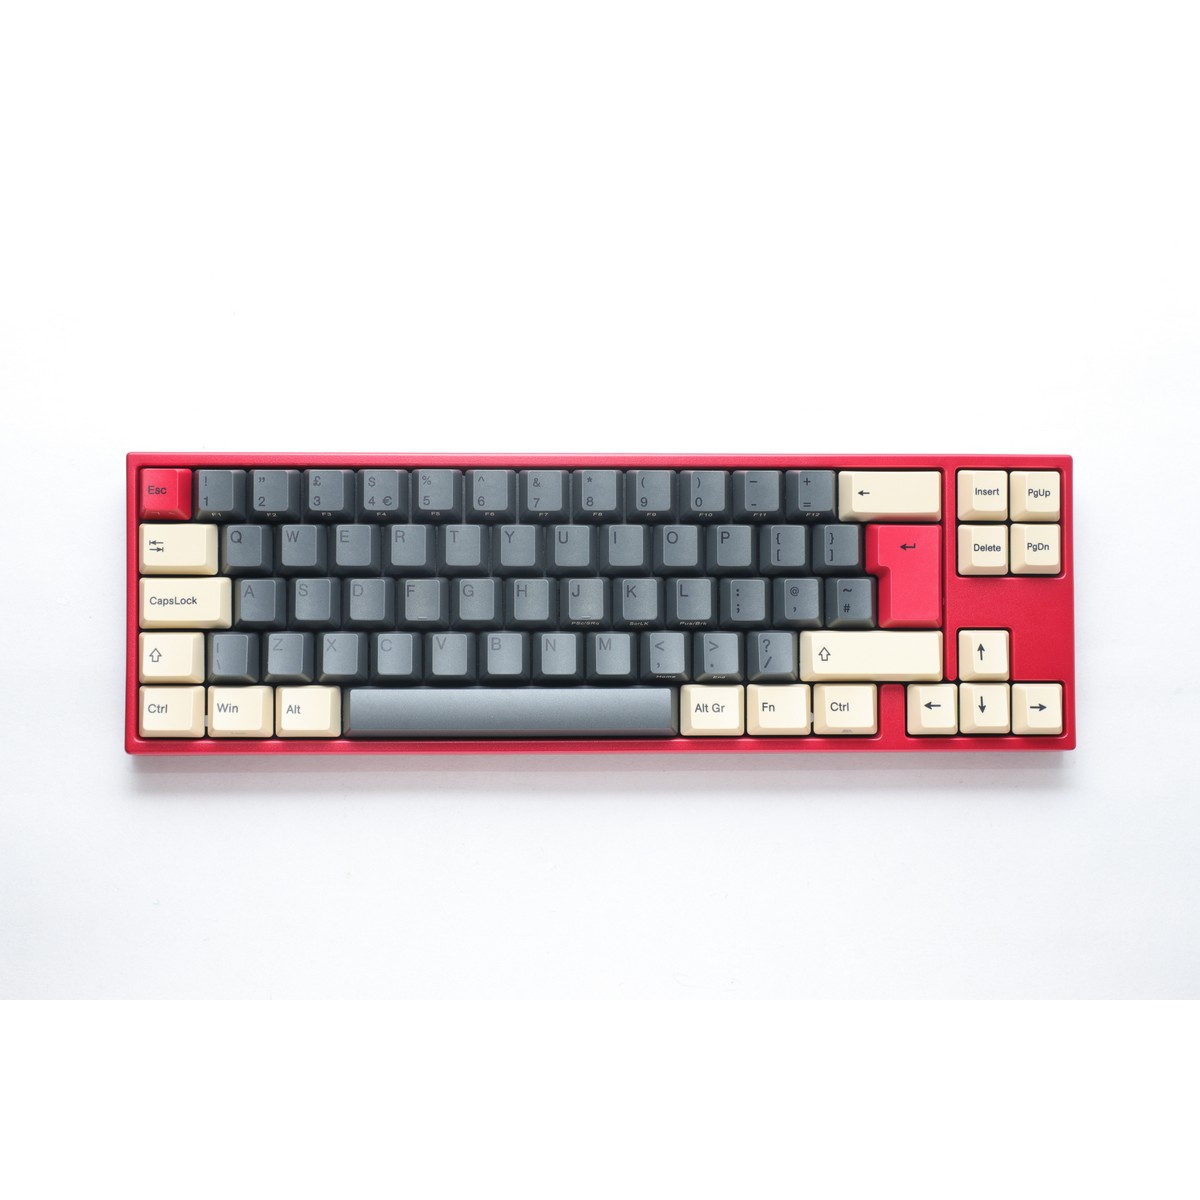 Ducky x Varmilo MIYA 69 Pro Knight Mechanical Gaming Keyboard Cherry MX Blue White Backlit - Red/Grey/Cream